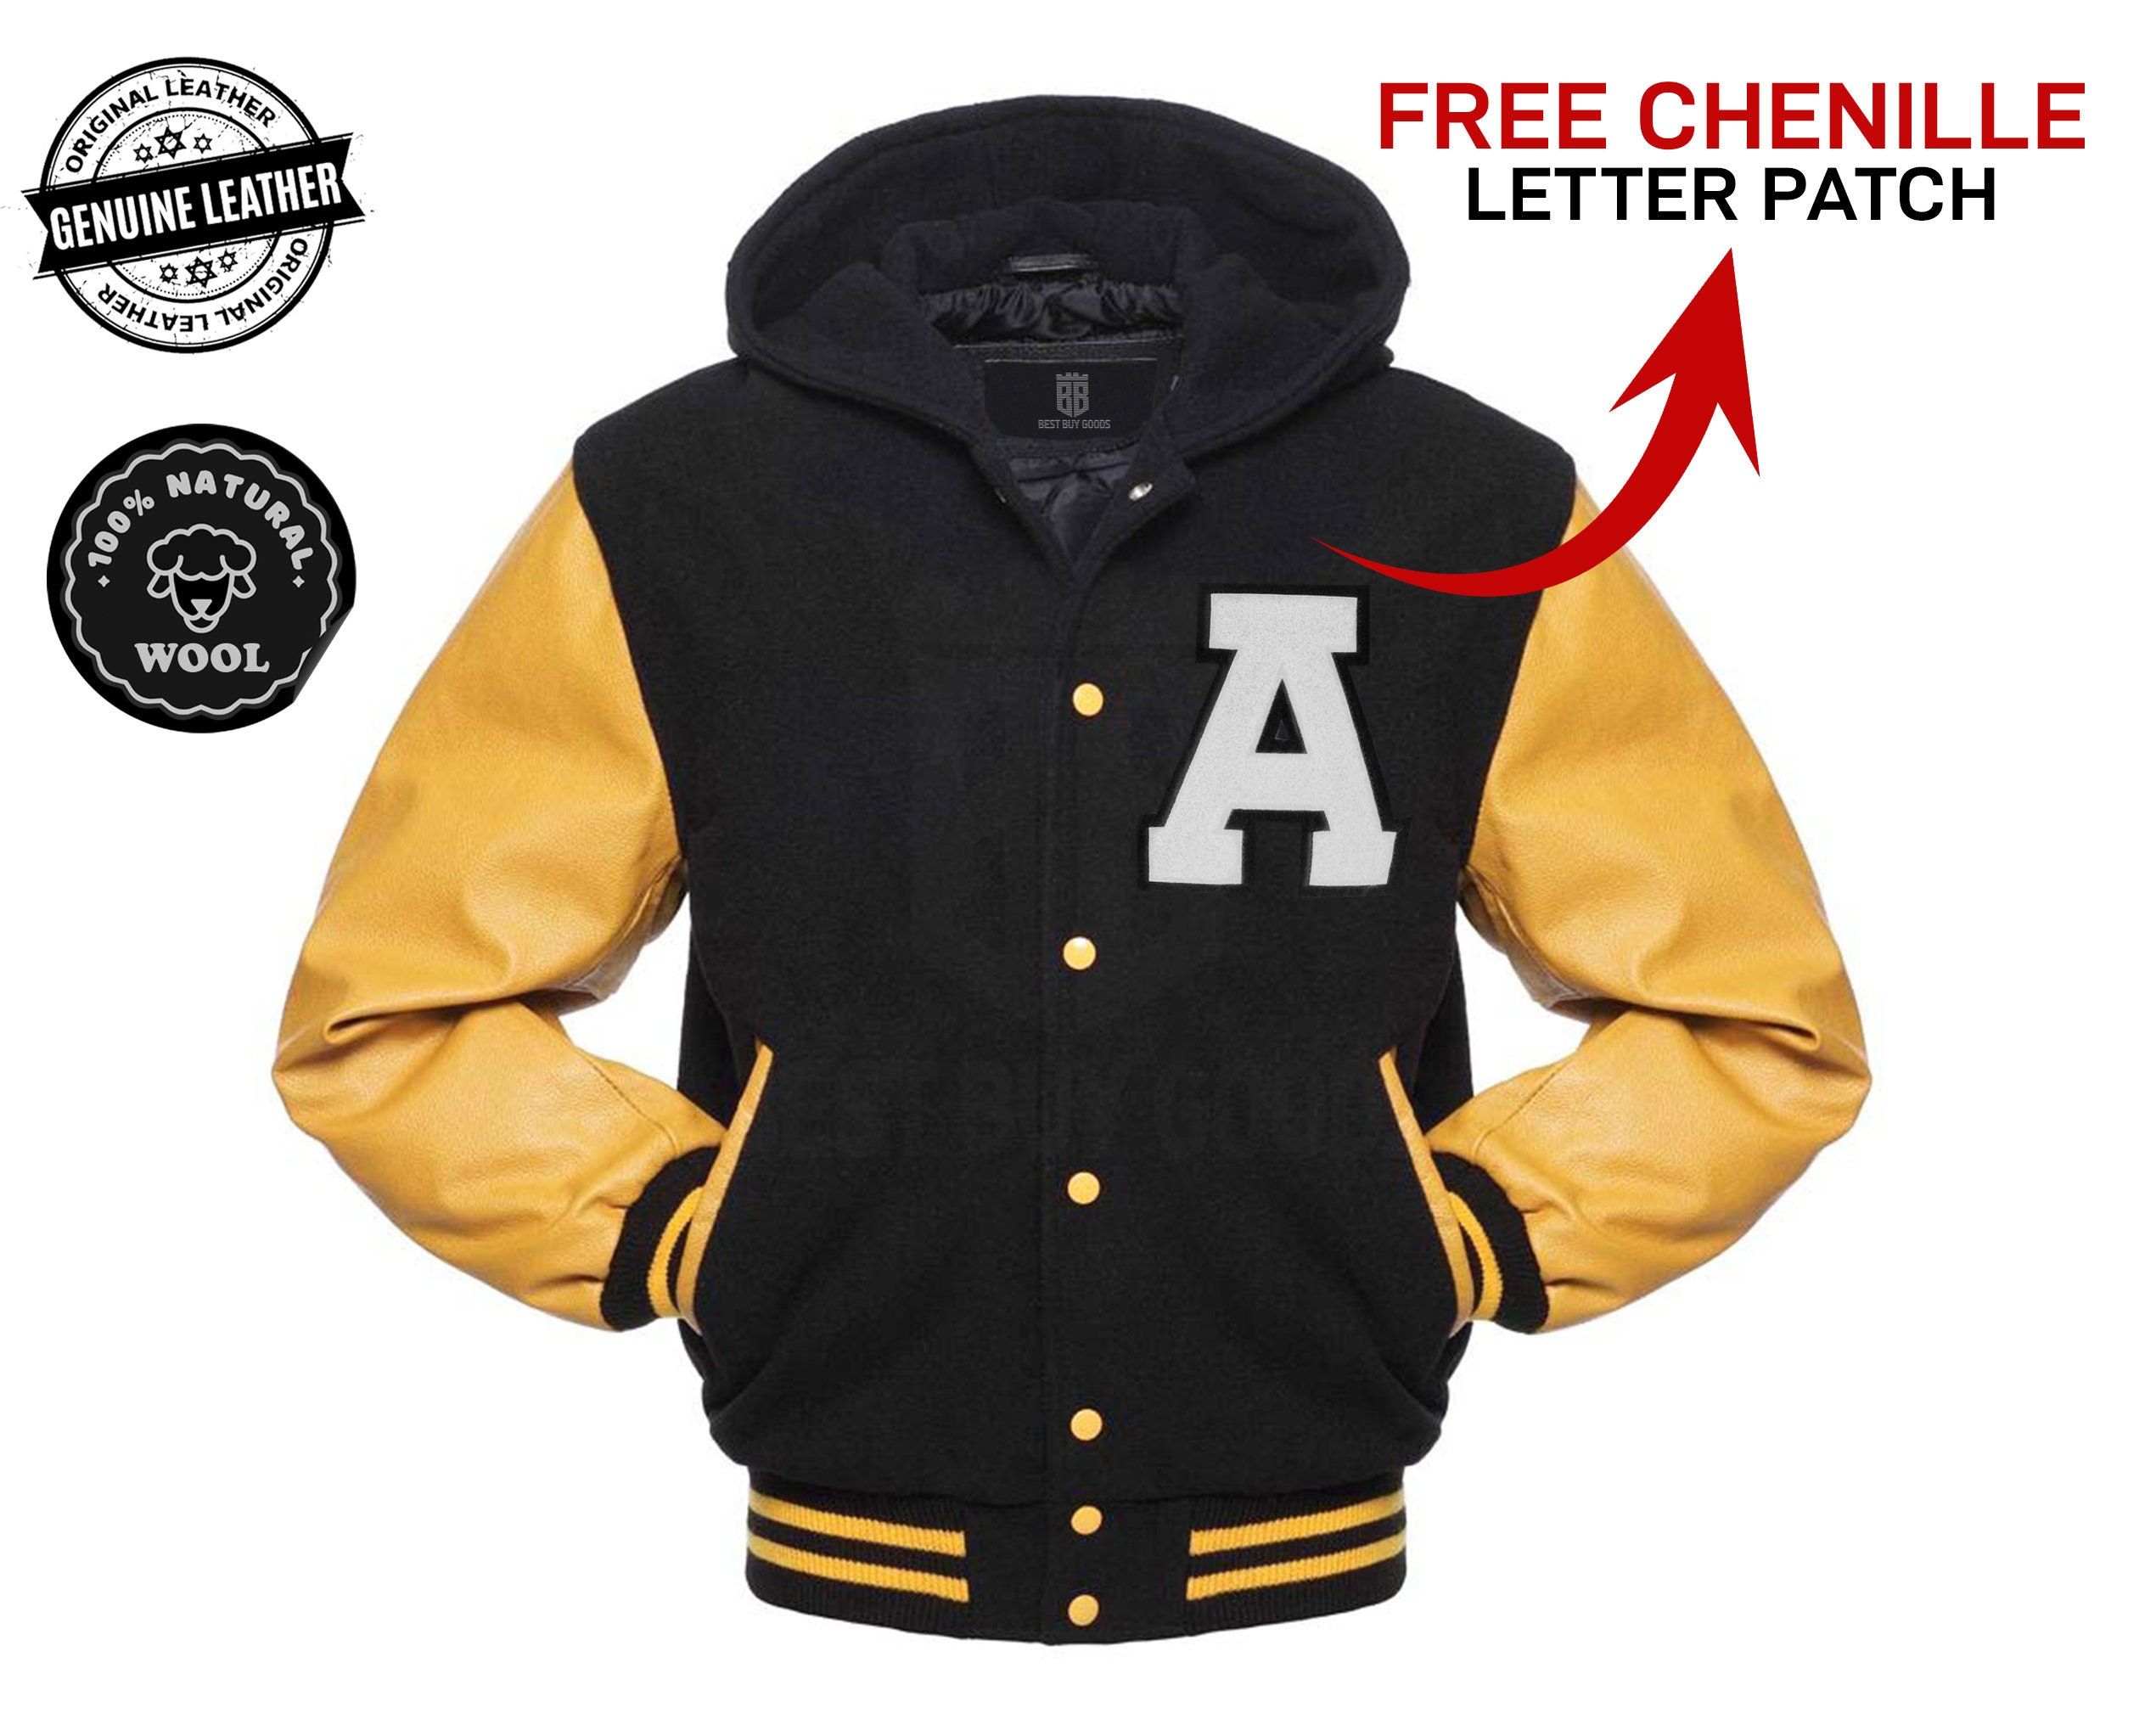 Moj Custom Orders Design Yellow and Black Varsity Jacket